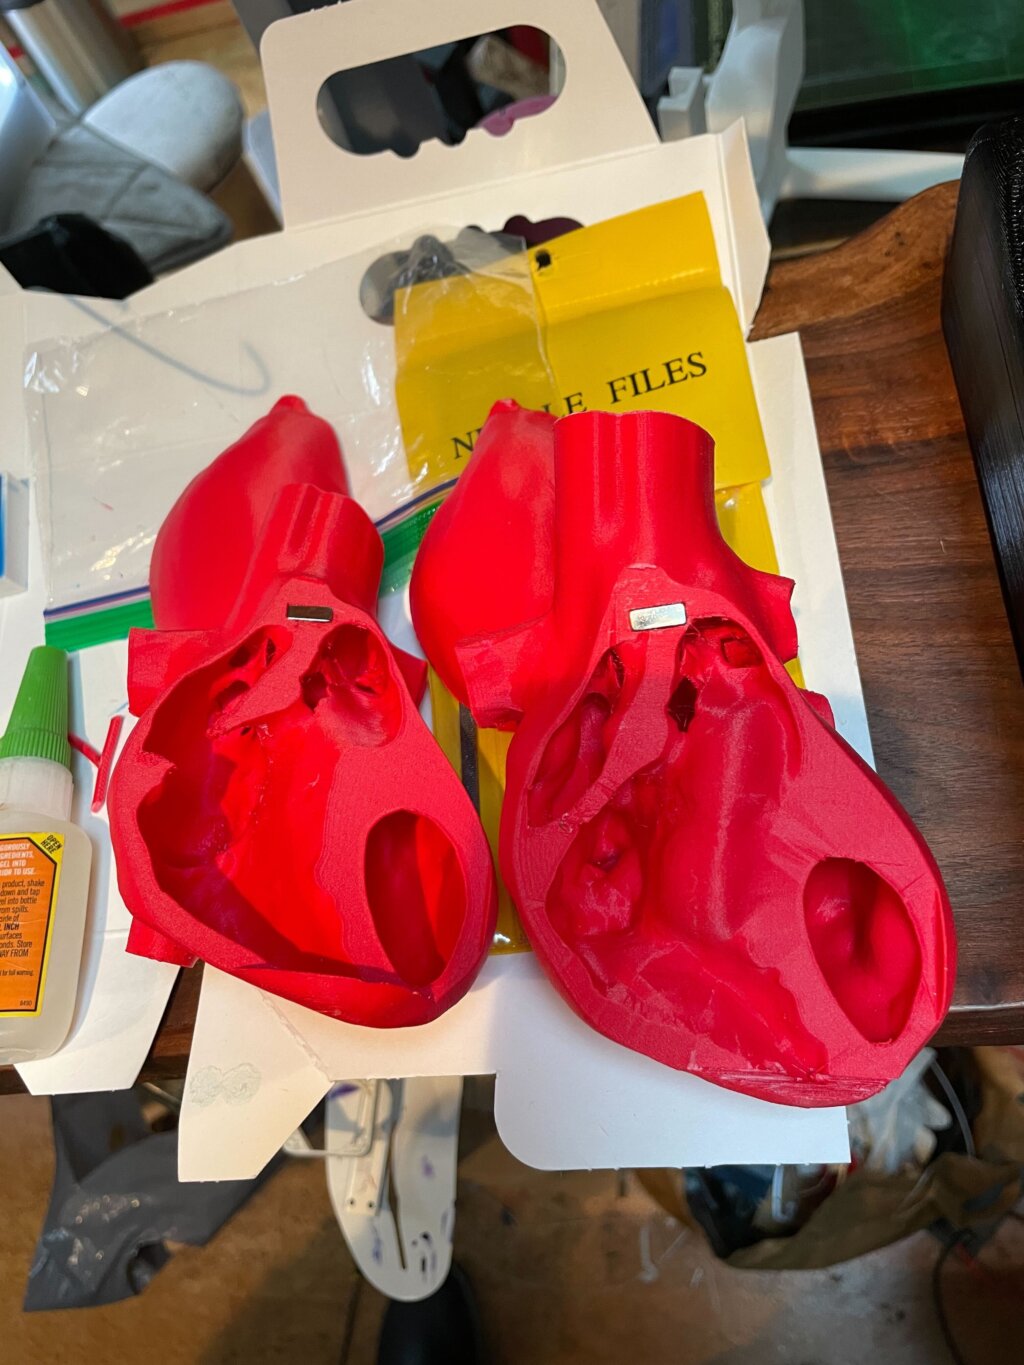 3D printed heart models